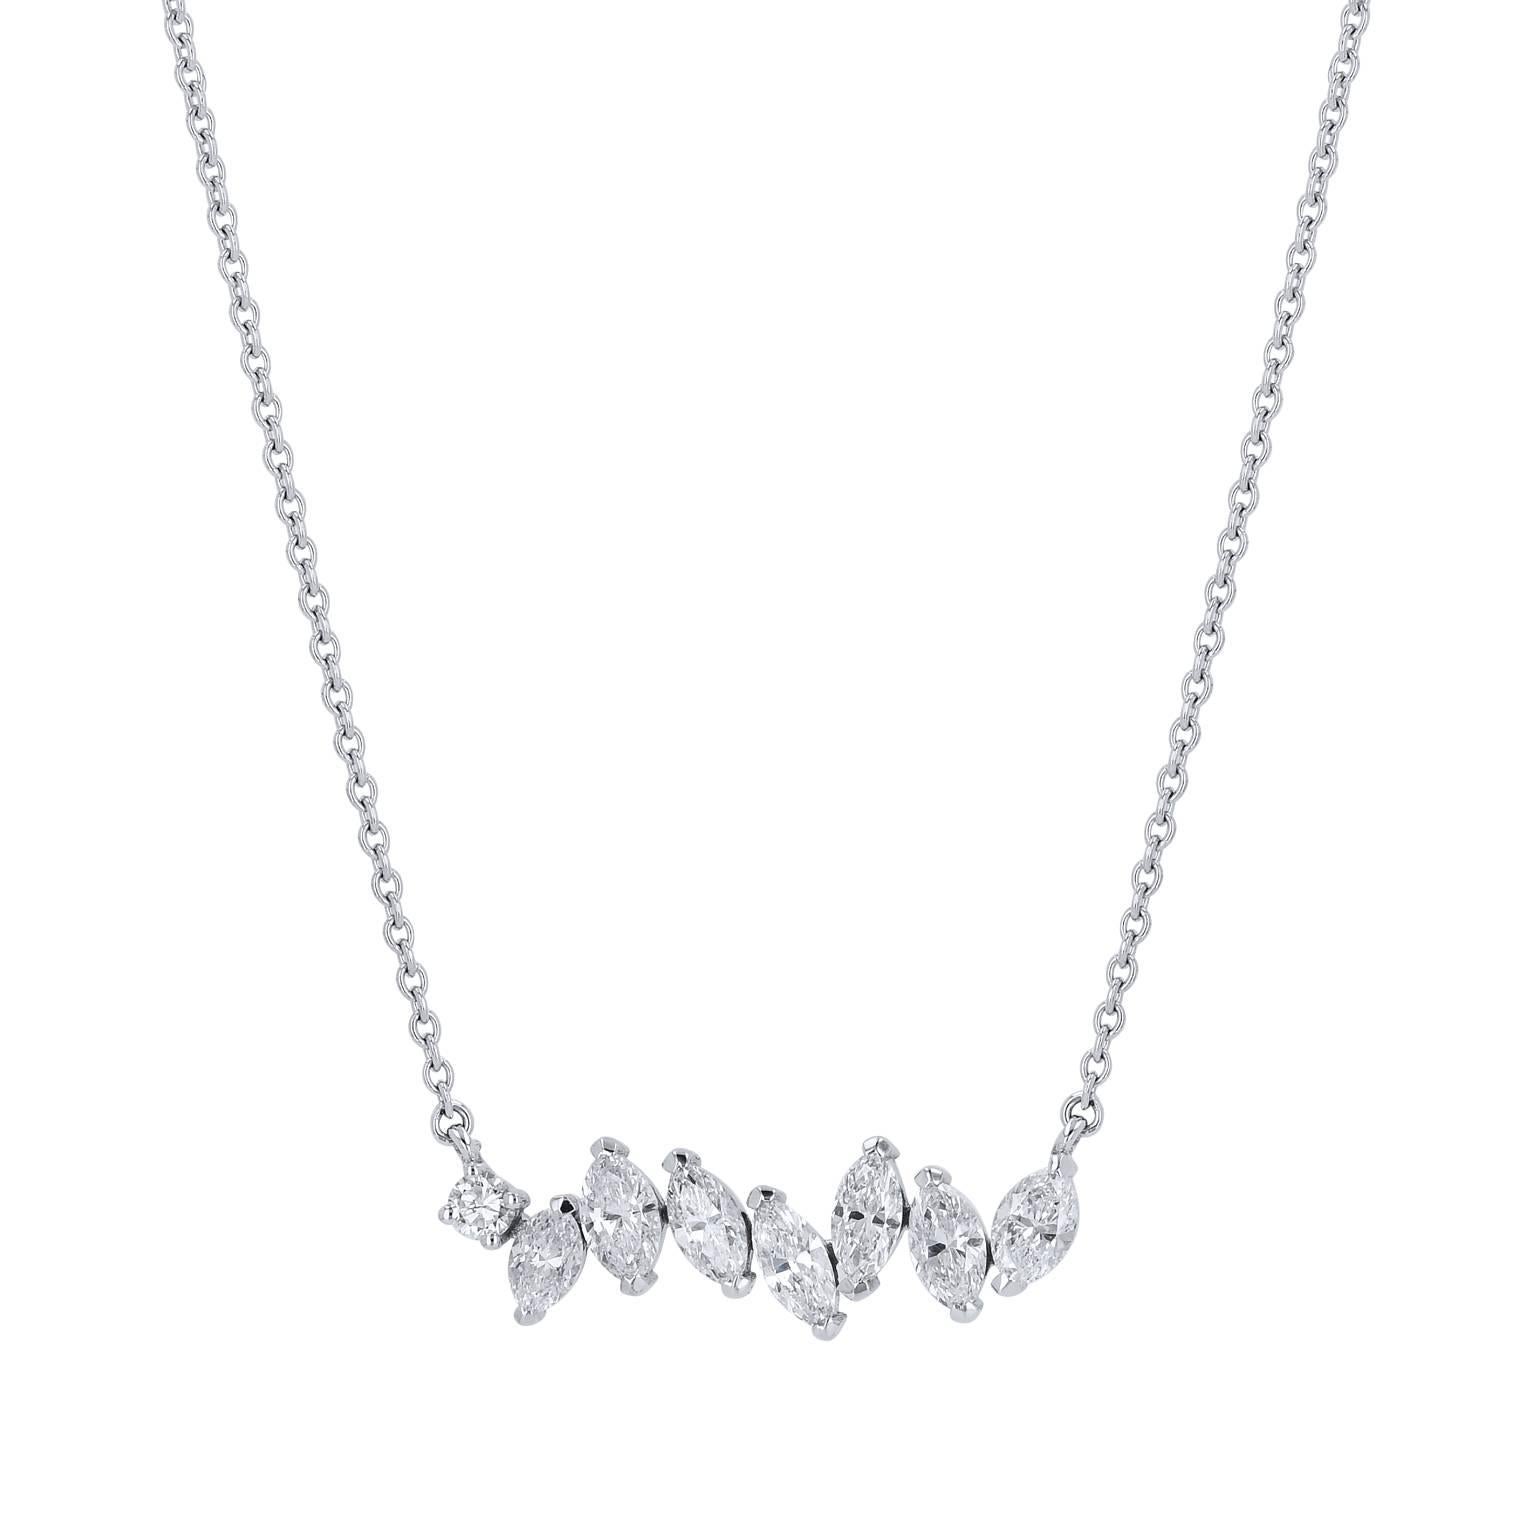 1.95 Carat Horizontal Marquis Diamond Pendant Bar Necklace